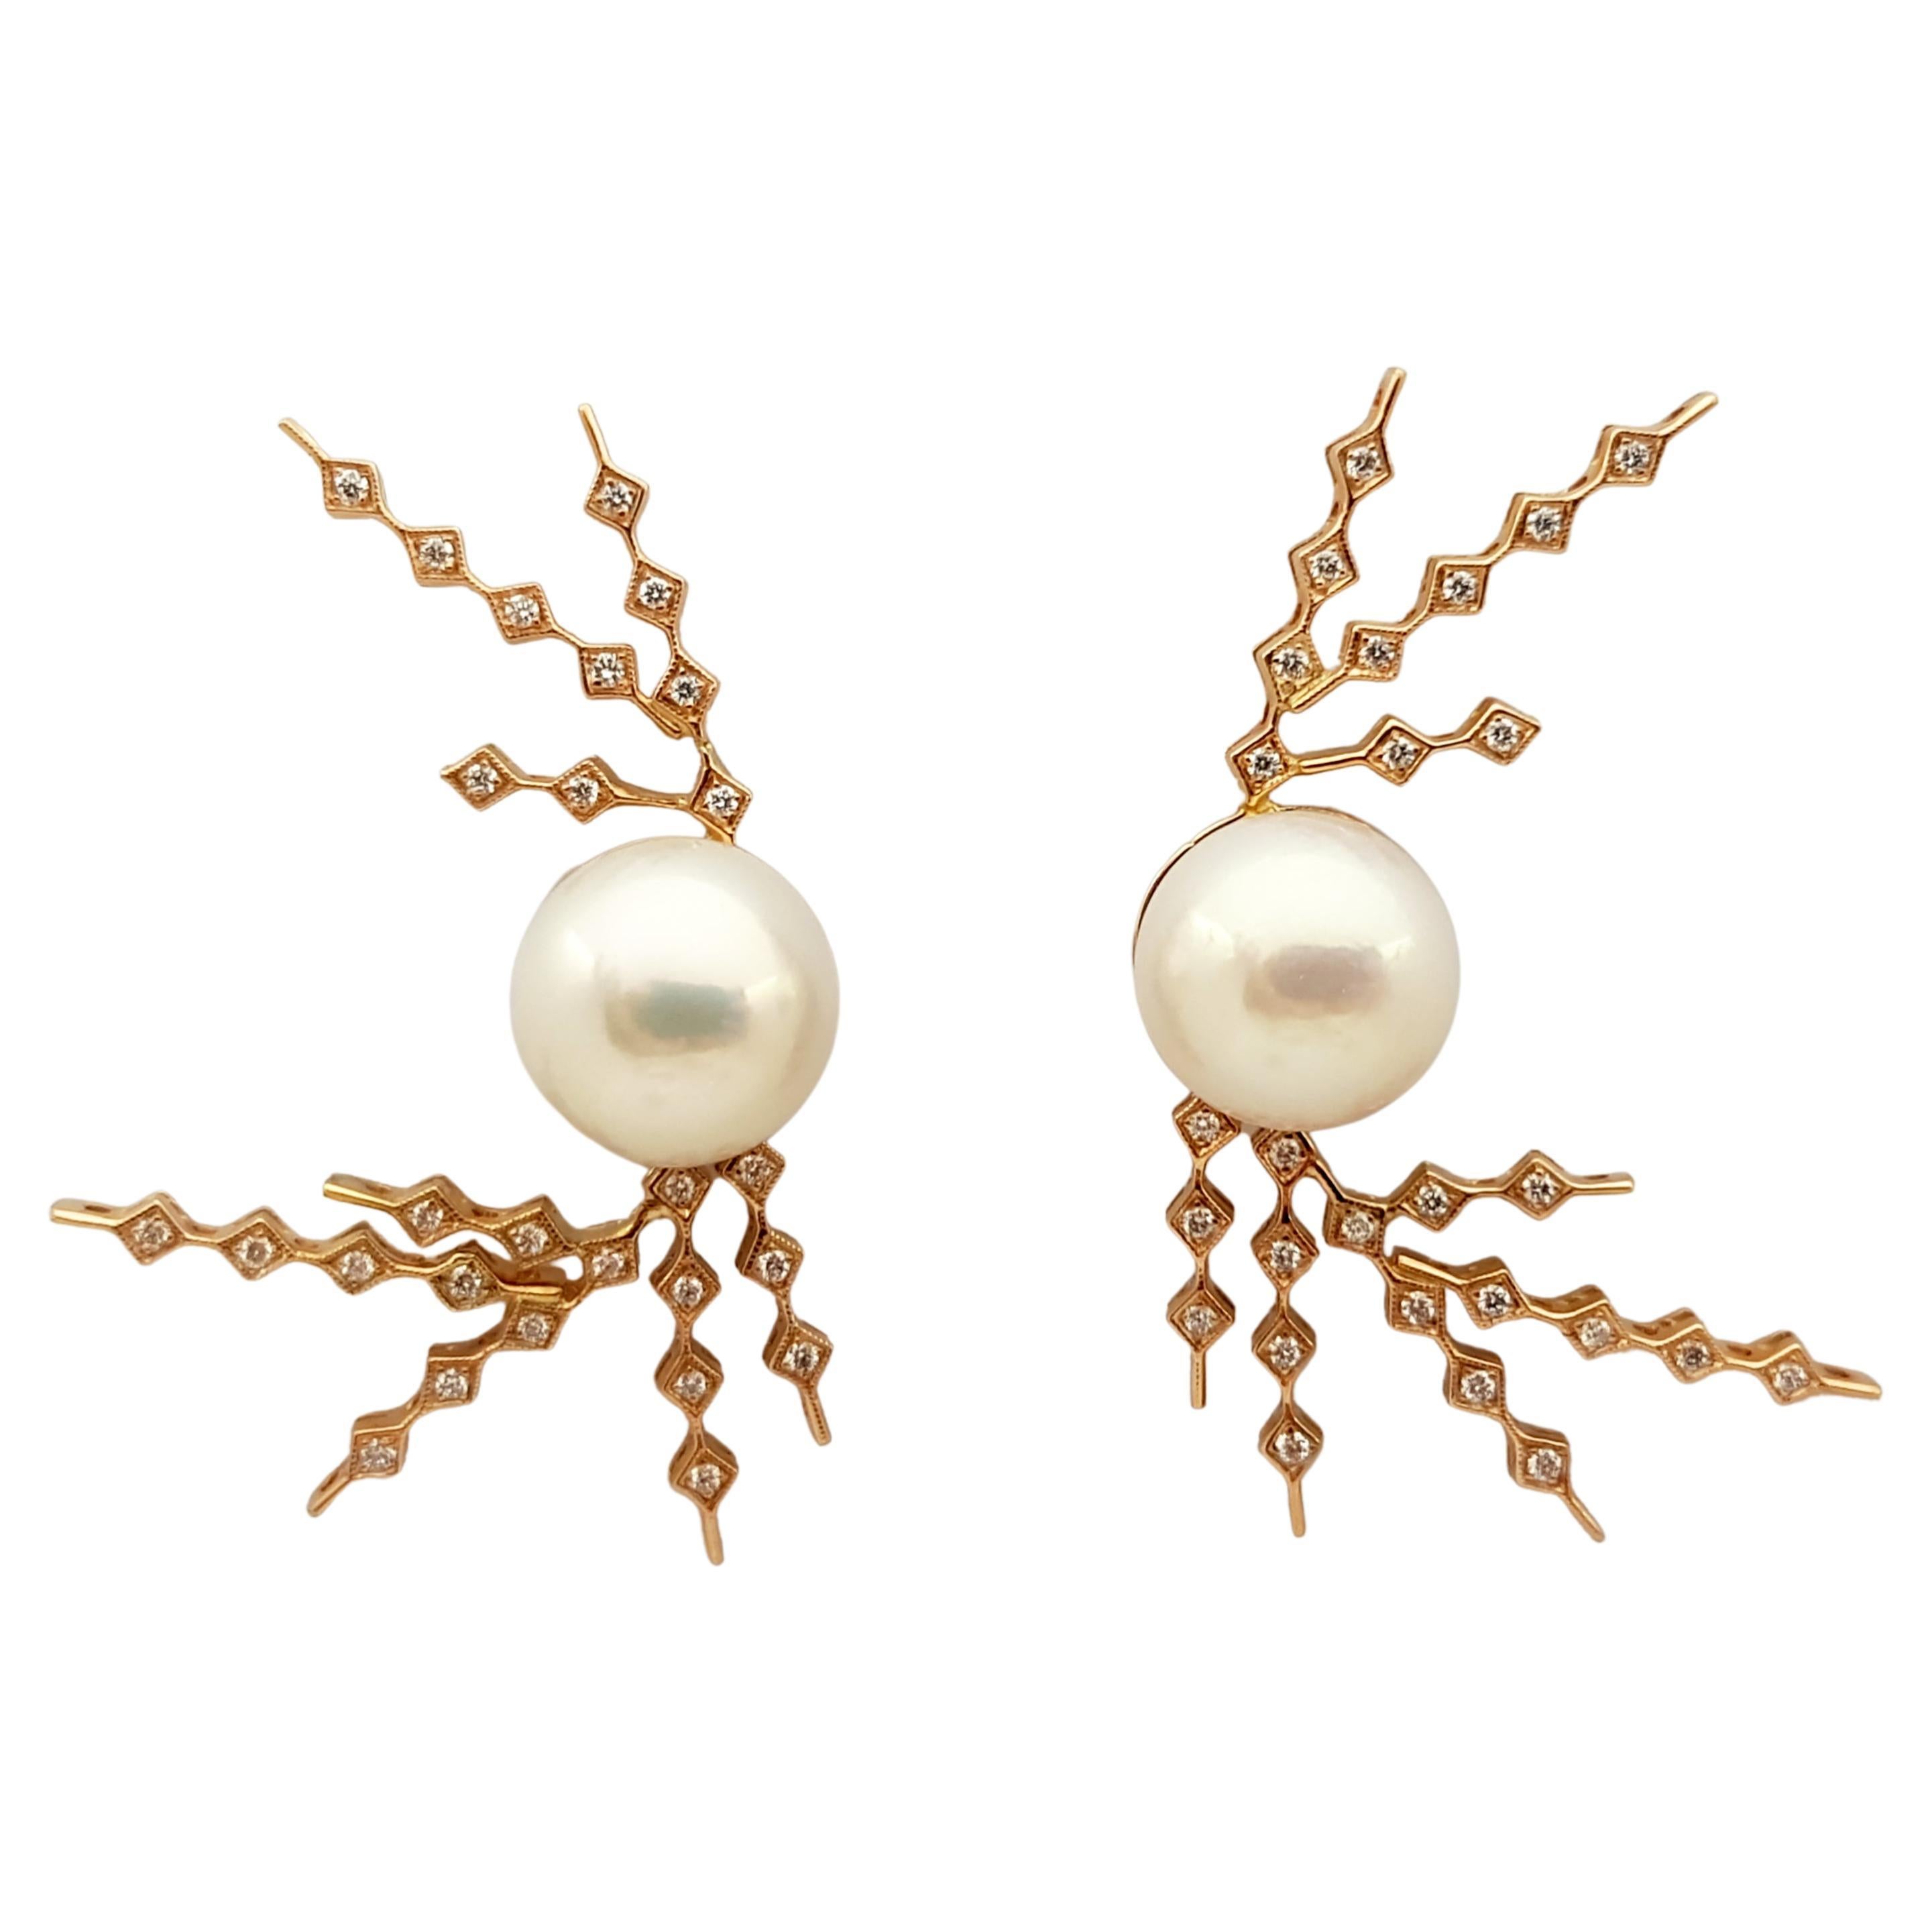 Pearl with Diamond 0.40 carat Earrings set in 18 Karat Rose Gold Settings

Width:  2.5 cm 
Length:  4.2 cm
Total Weight: 14.75 grams

